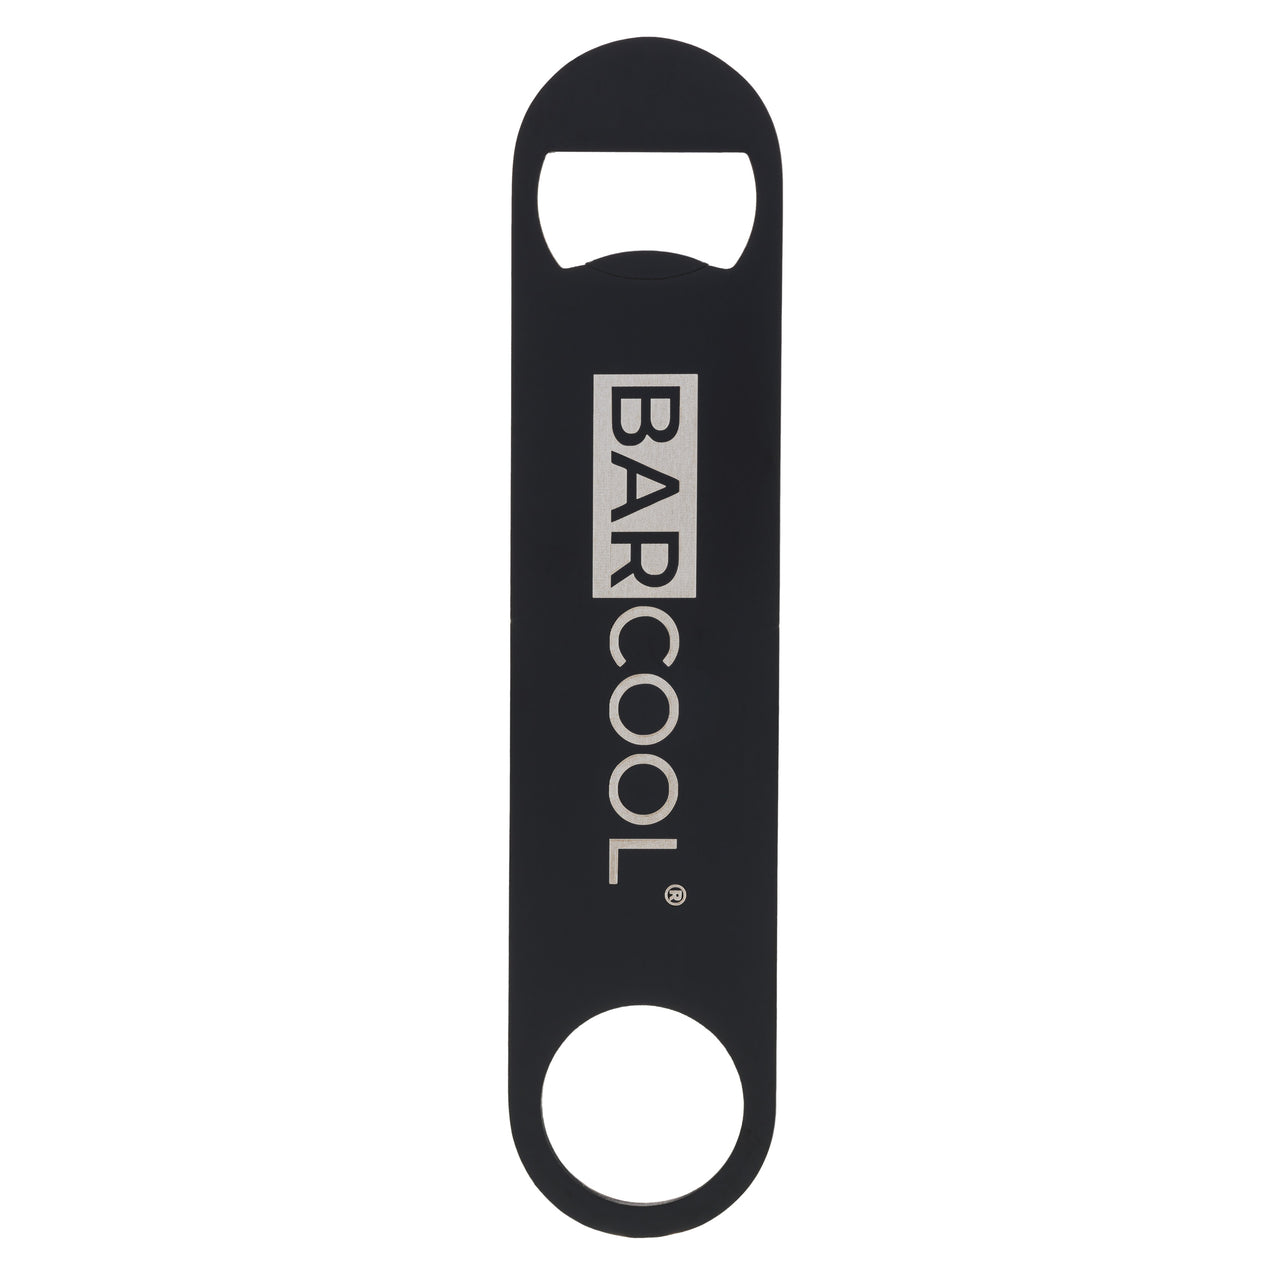 Barcool Magnetic Bottle Opener